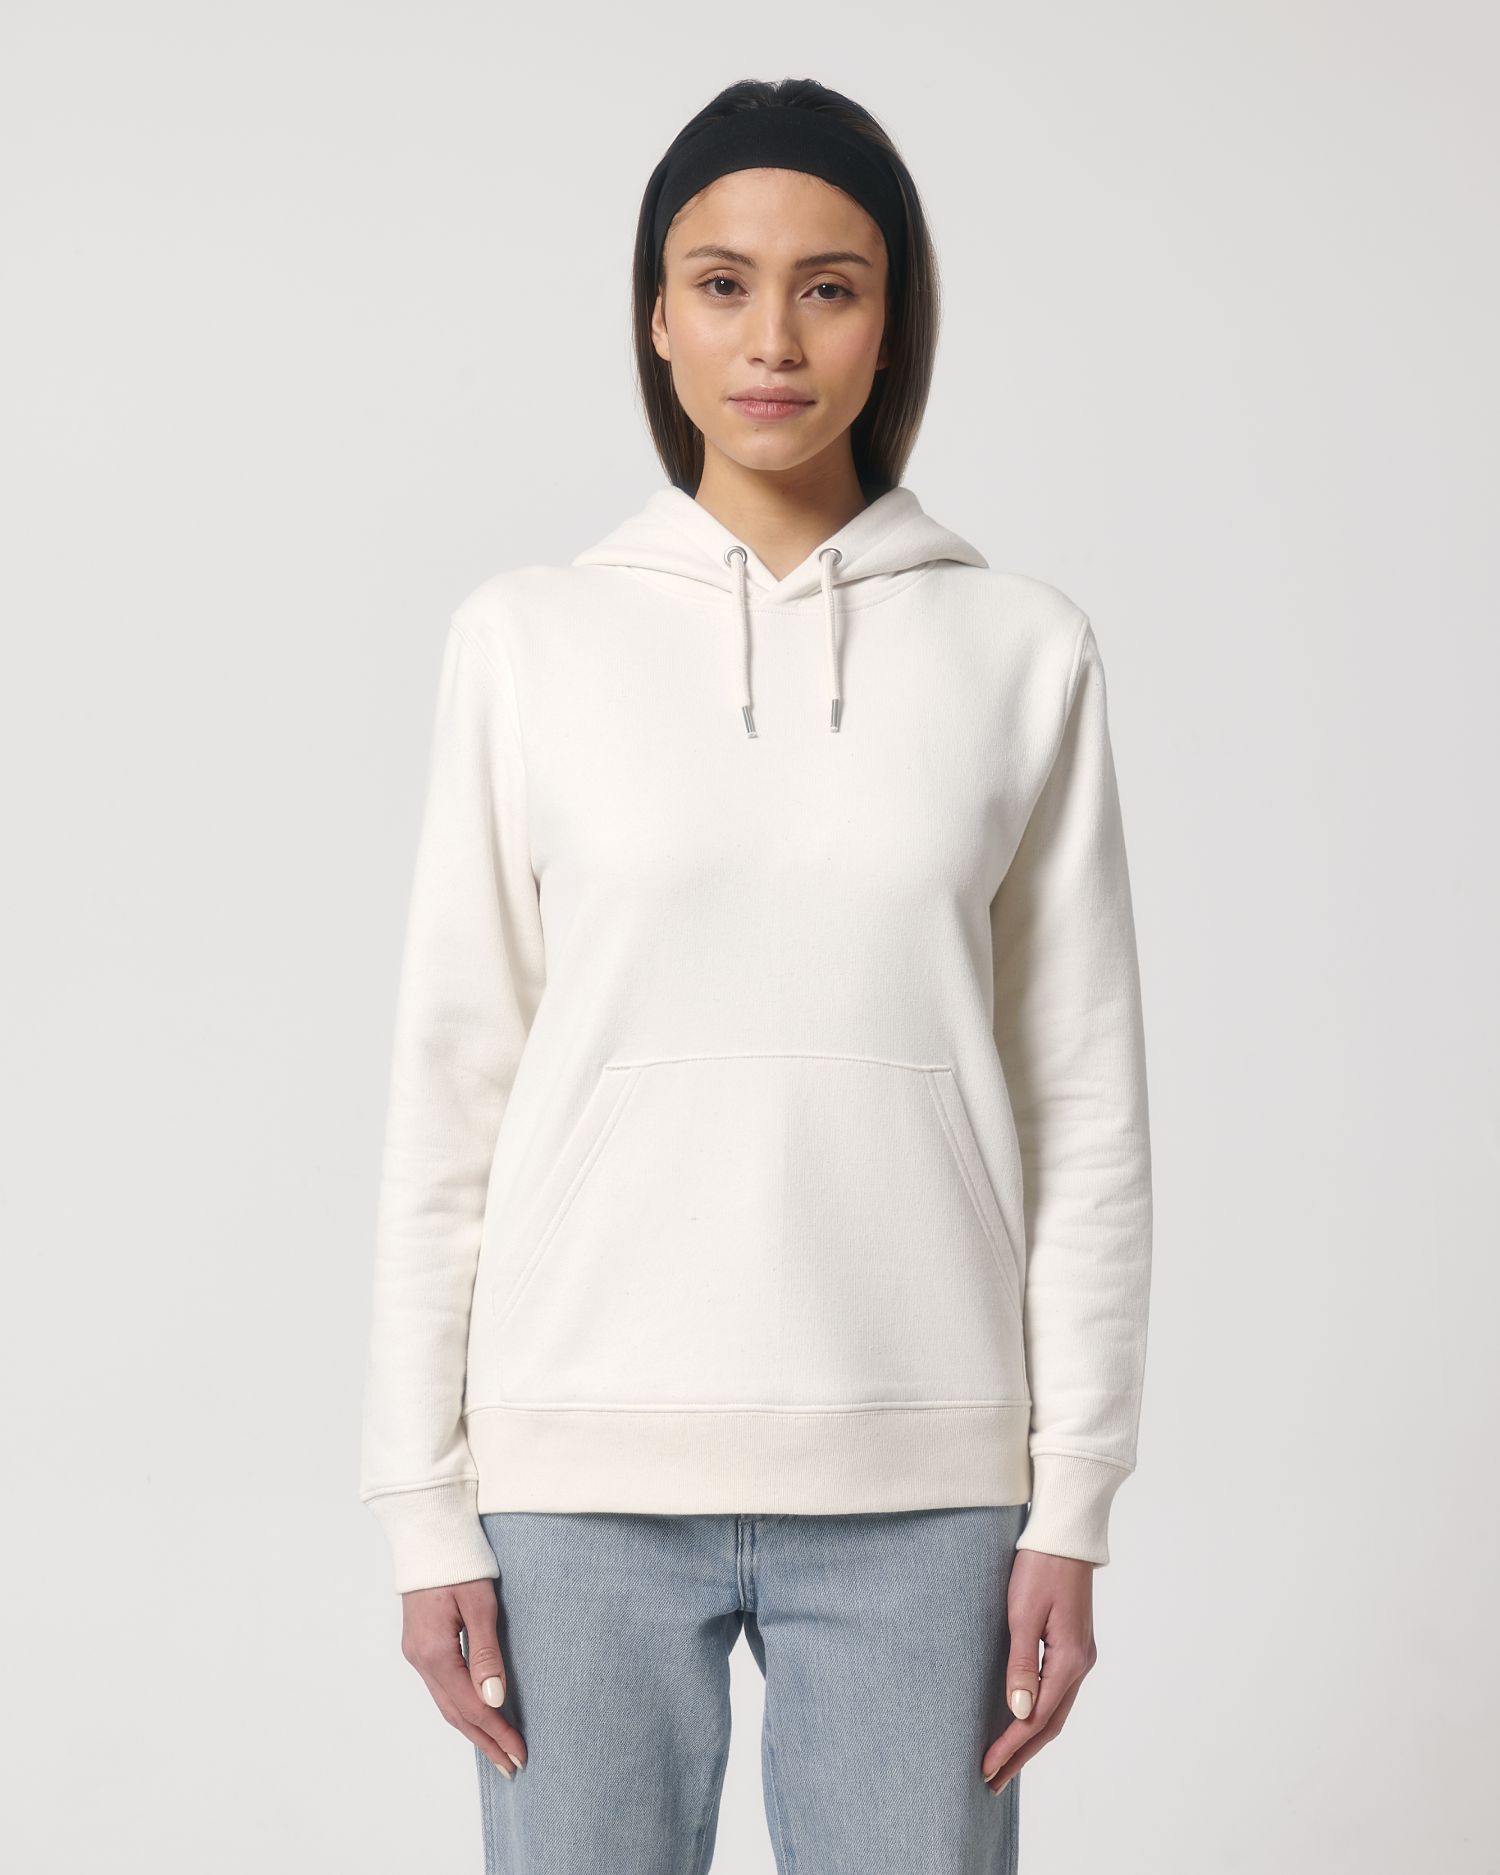 Hoodie sweatshirts RE-Cruiser in Farbe RE-White